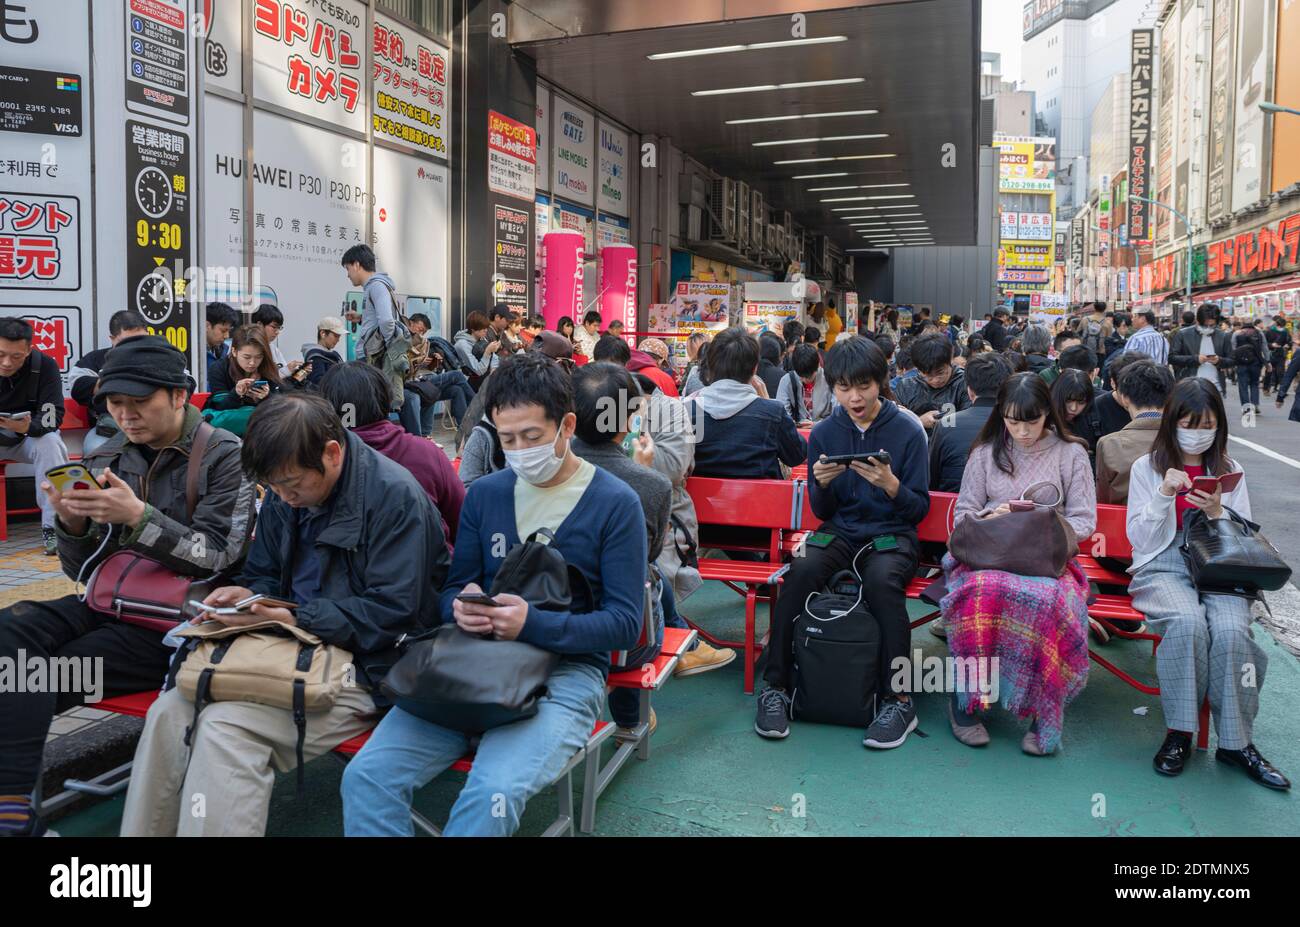 Japan, Tokyo City, Shinjuku District, West Side Street Stockfoto